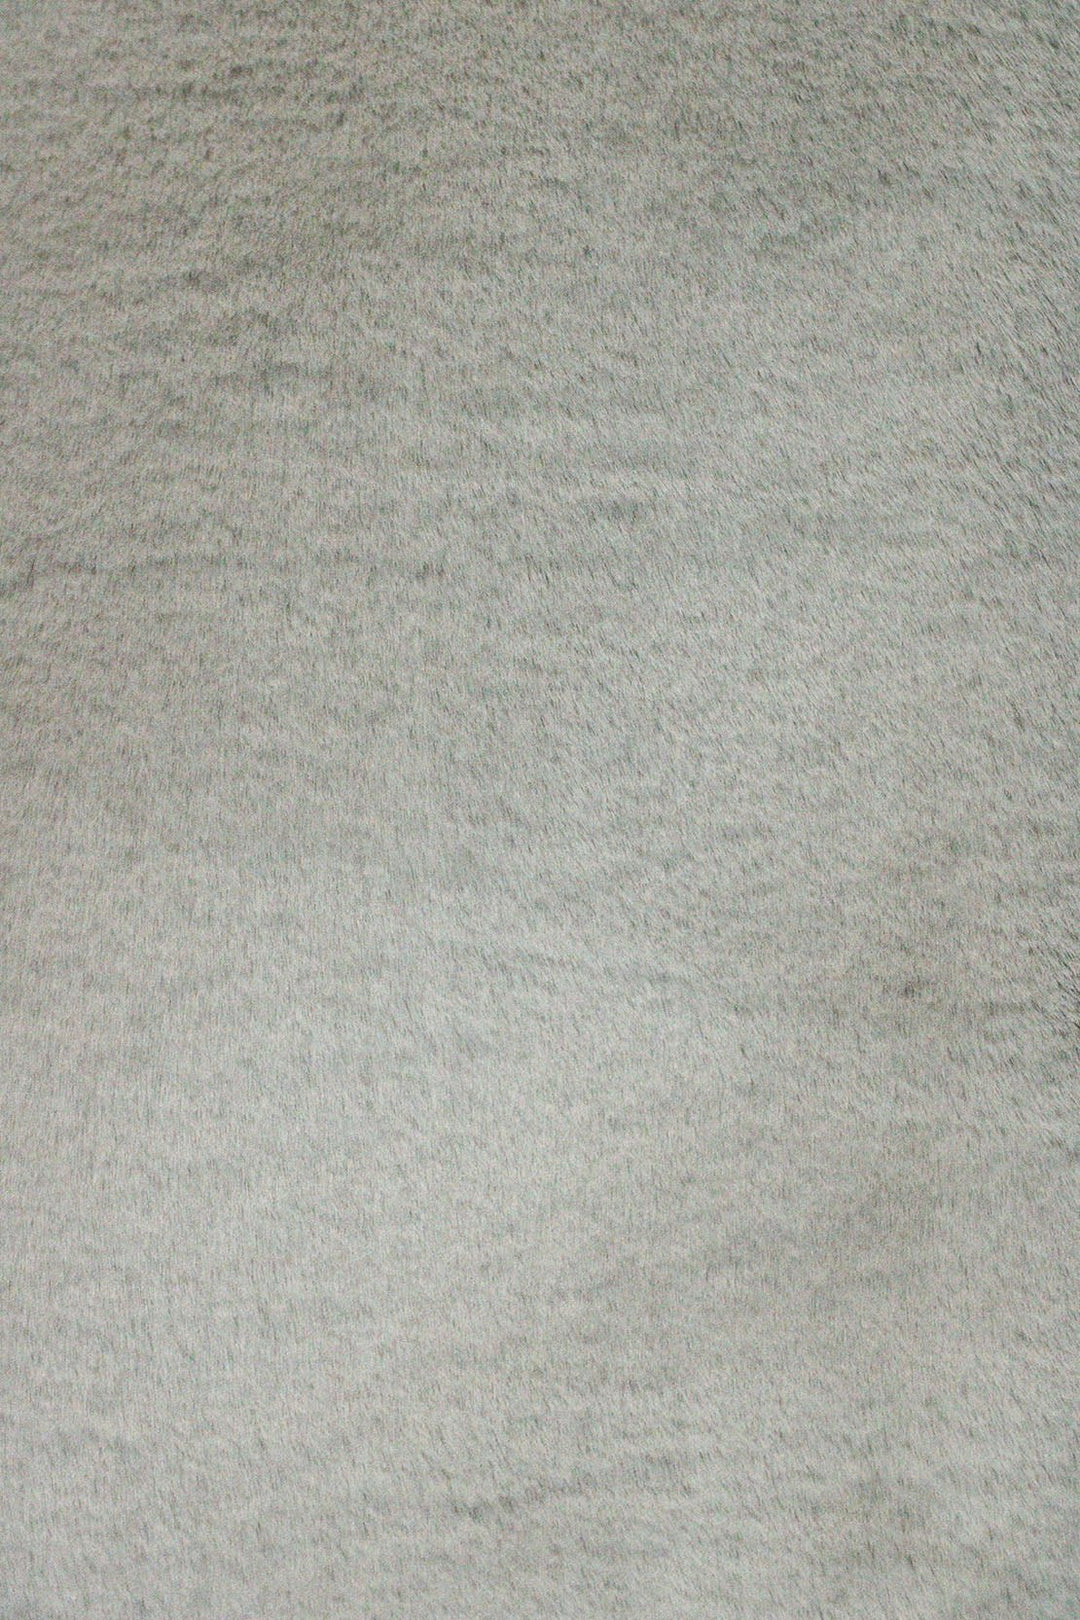 Super Soft Fantasy Shaggy Rug - 5.9 x 9.5 FT - Gray - Modern Indoor Fuzzy Plush Area Rug - V Surfaces